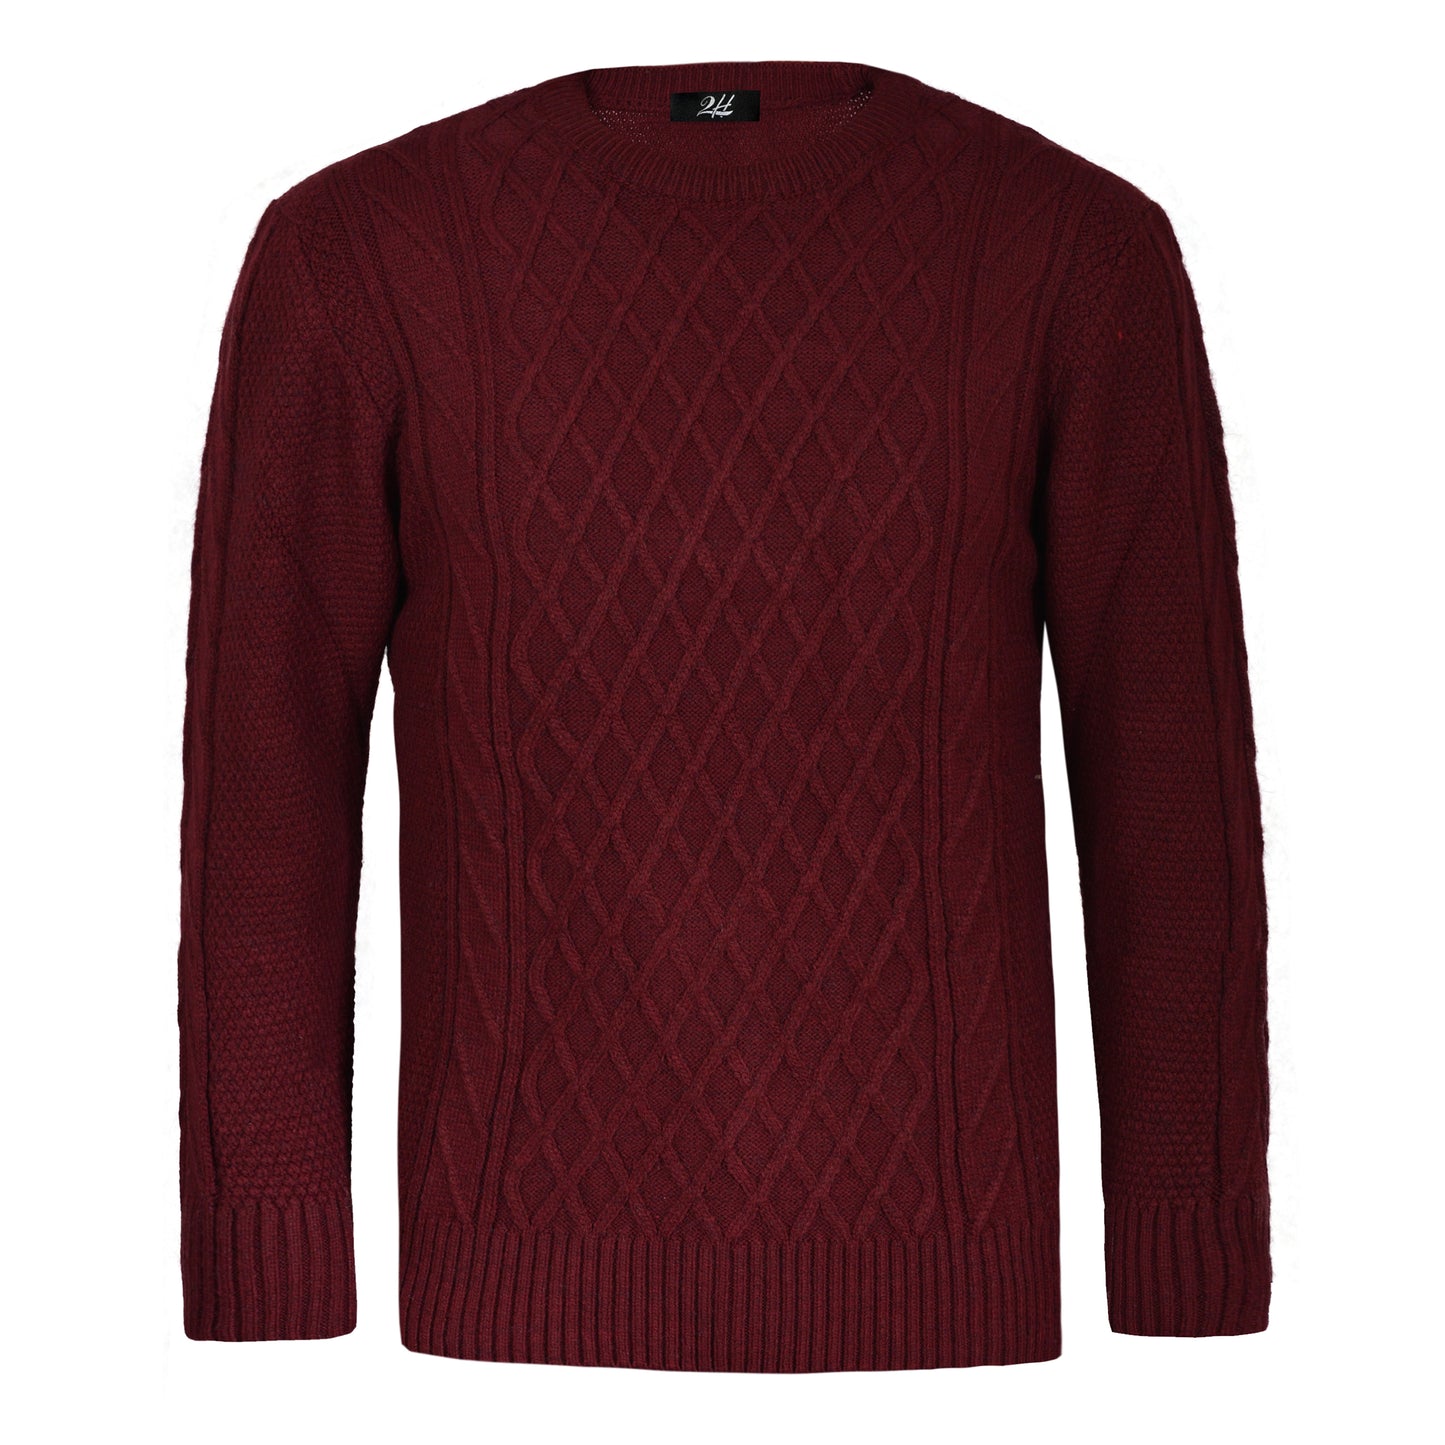 2H Brick Red Wool Round Neck Sweater